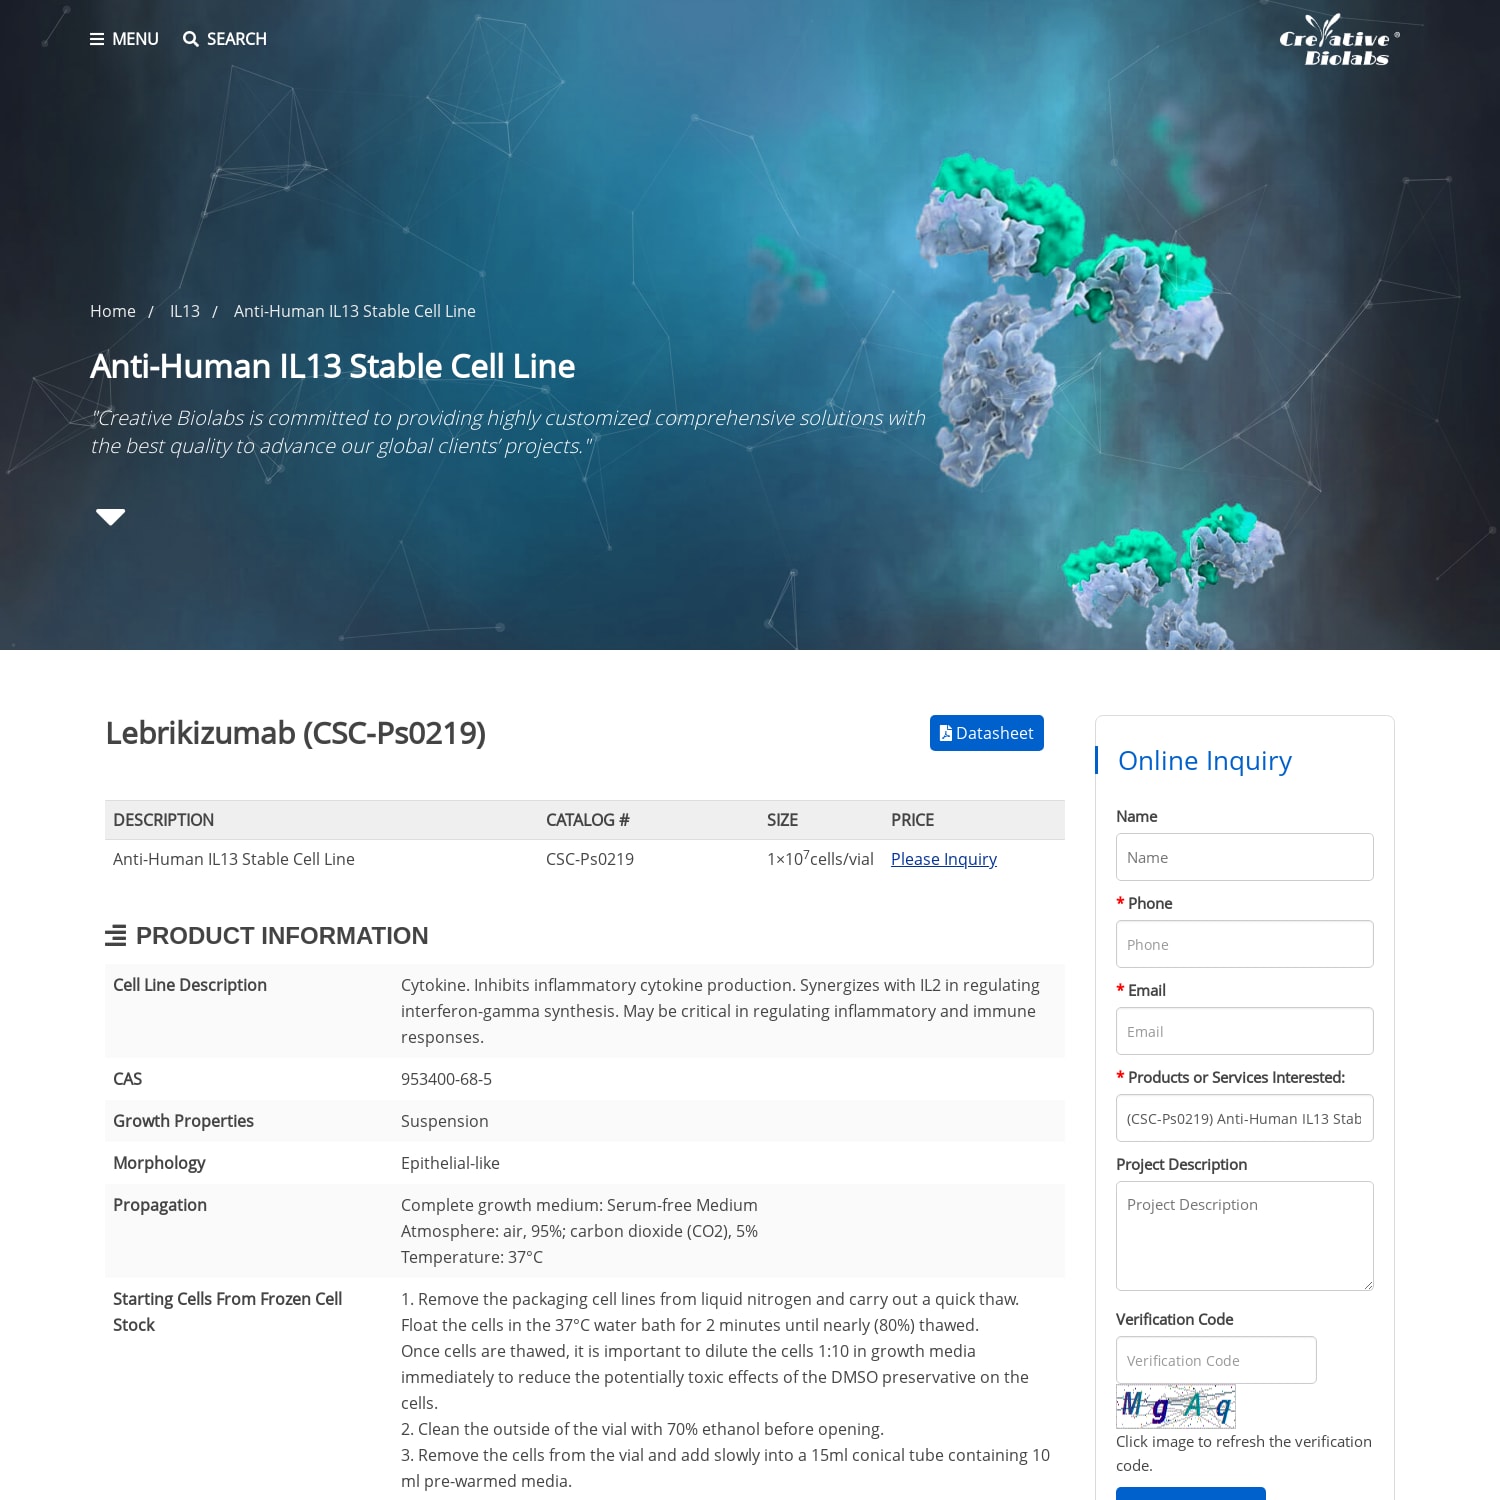 Anti-Human IL13 Stable Cell Line, Lebrikizumab - Creative Biolabs